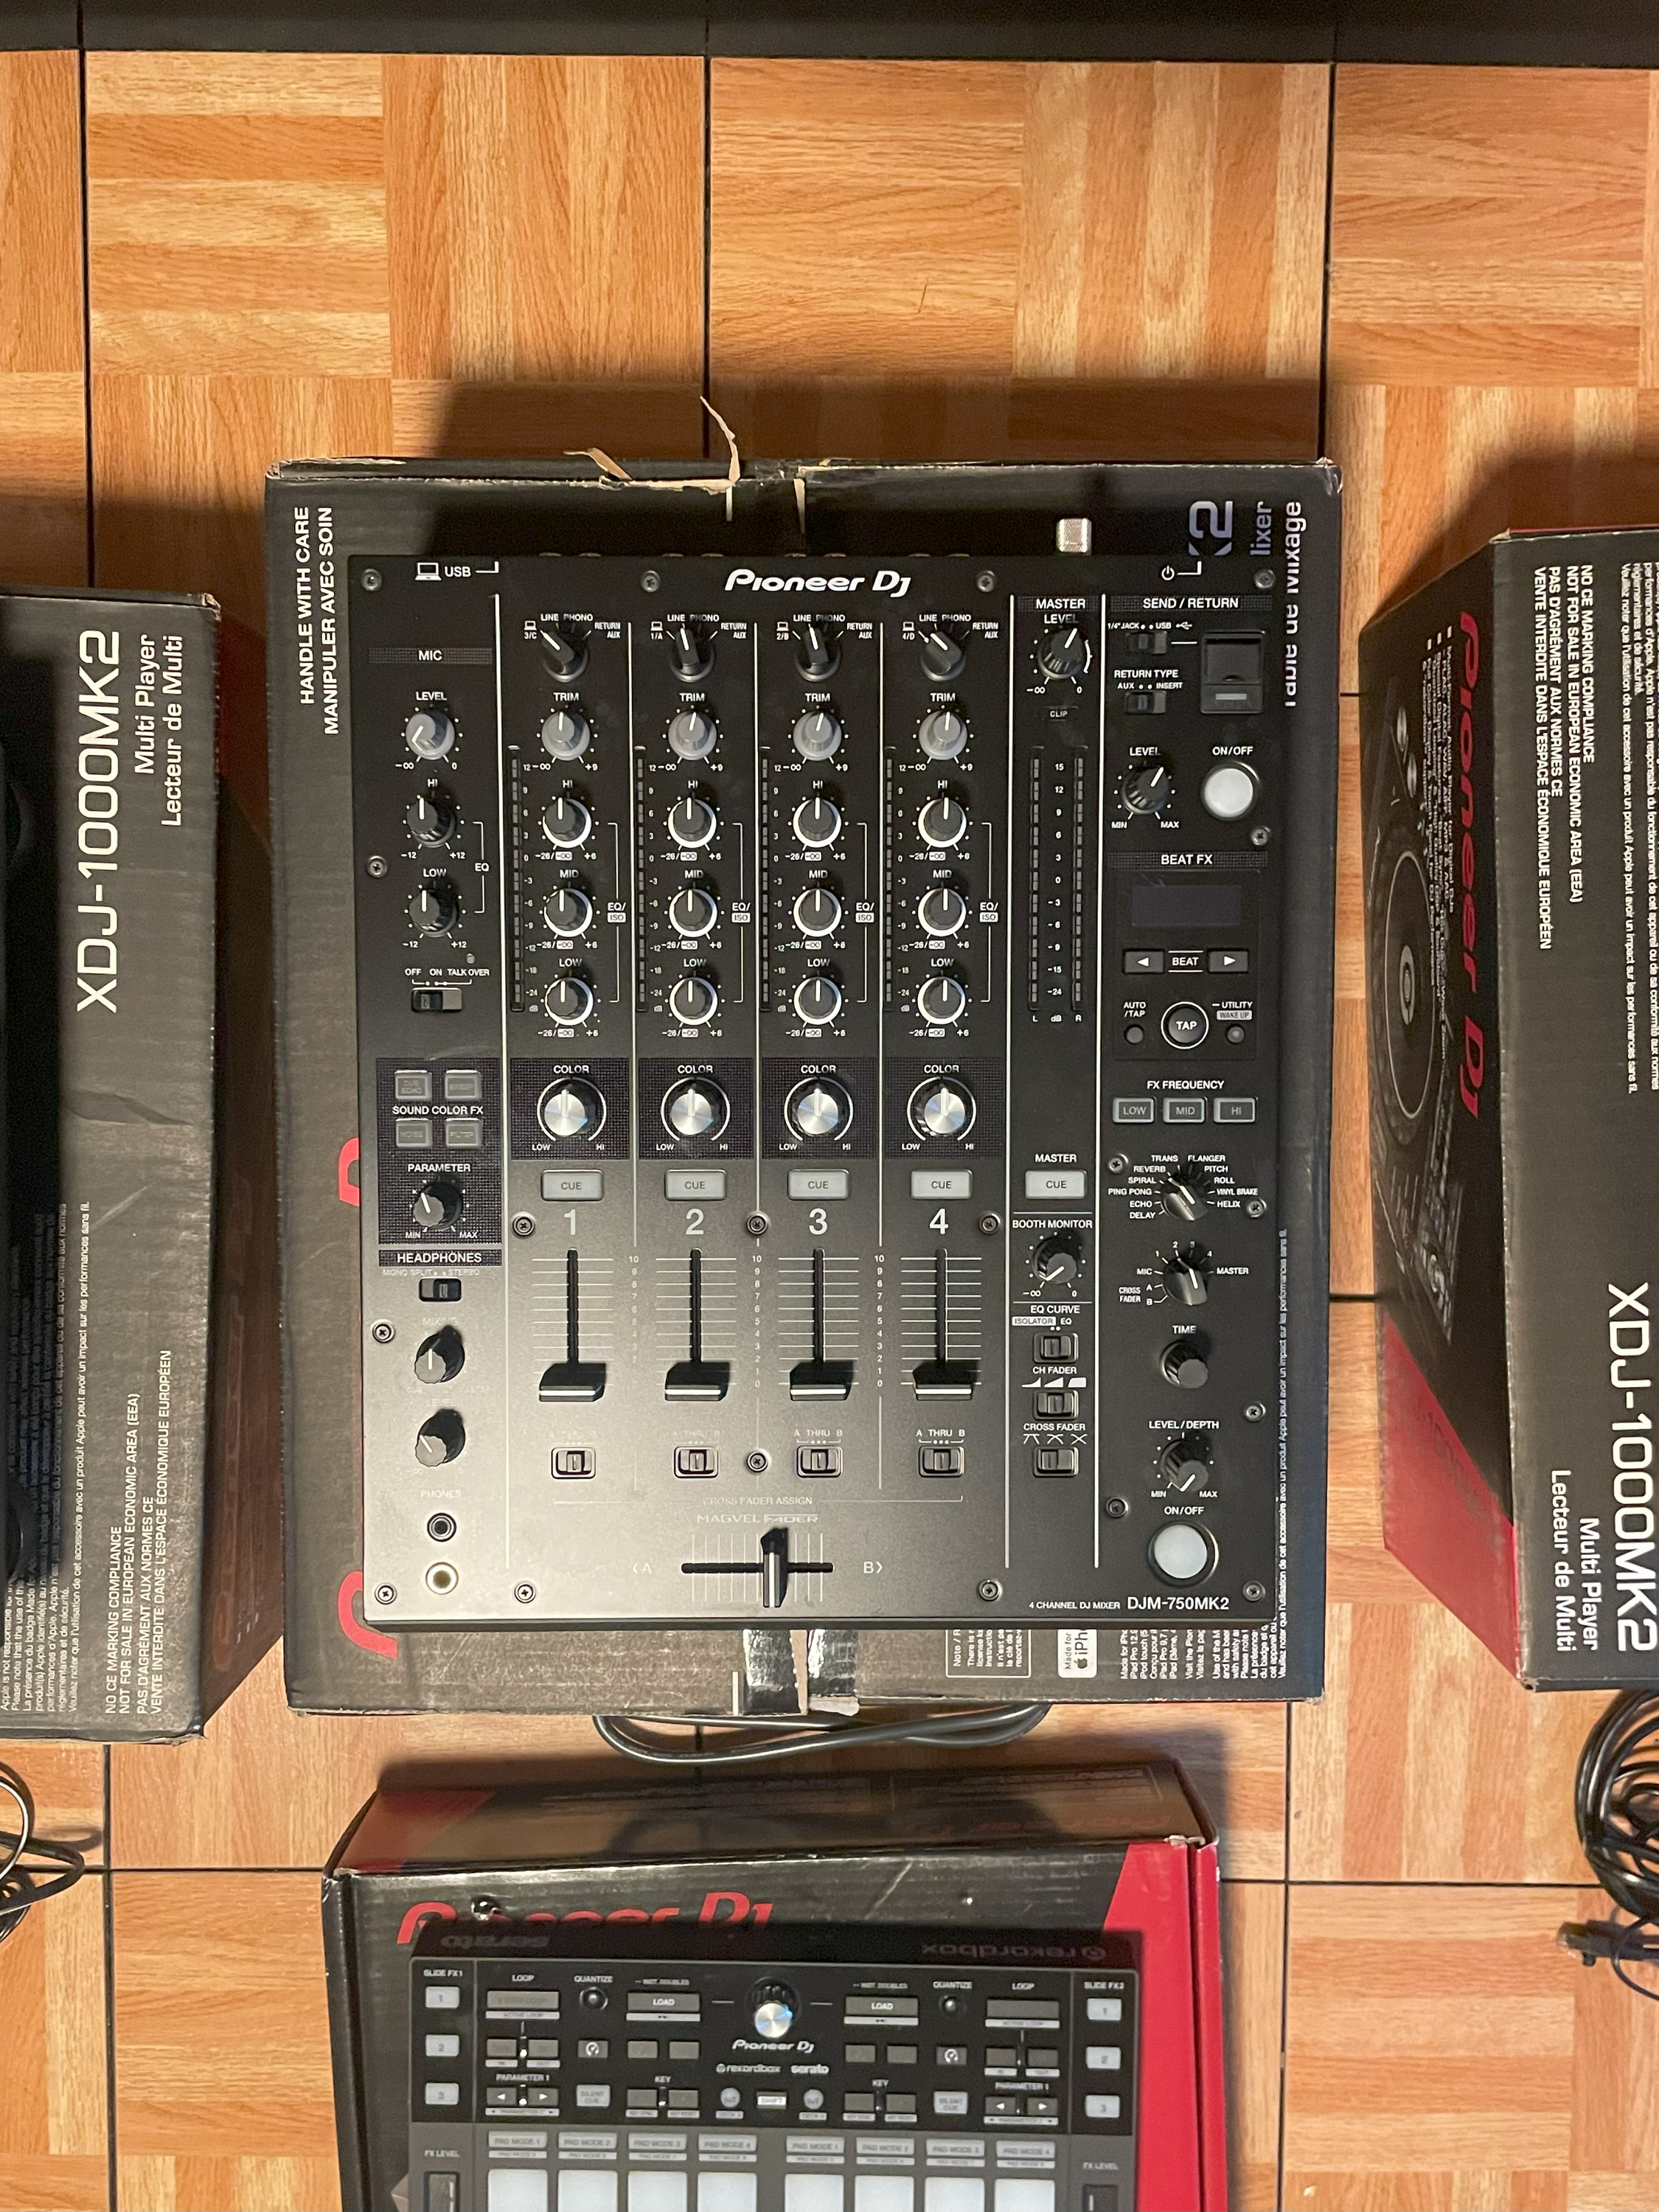 Used Pioneer Pro DJ Mixer DJM-600 - Sweetwater's Gear Exchange